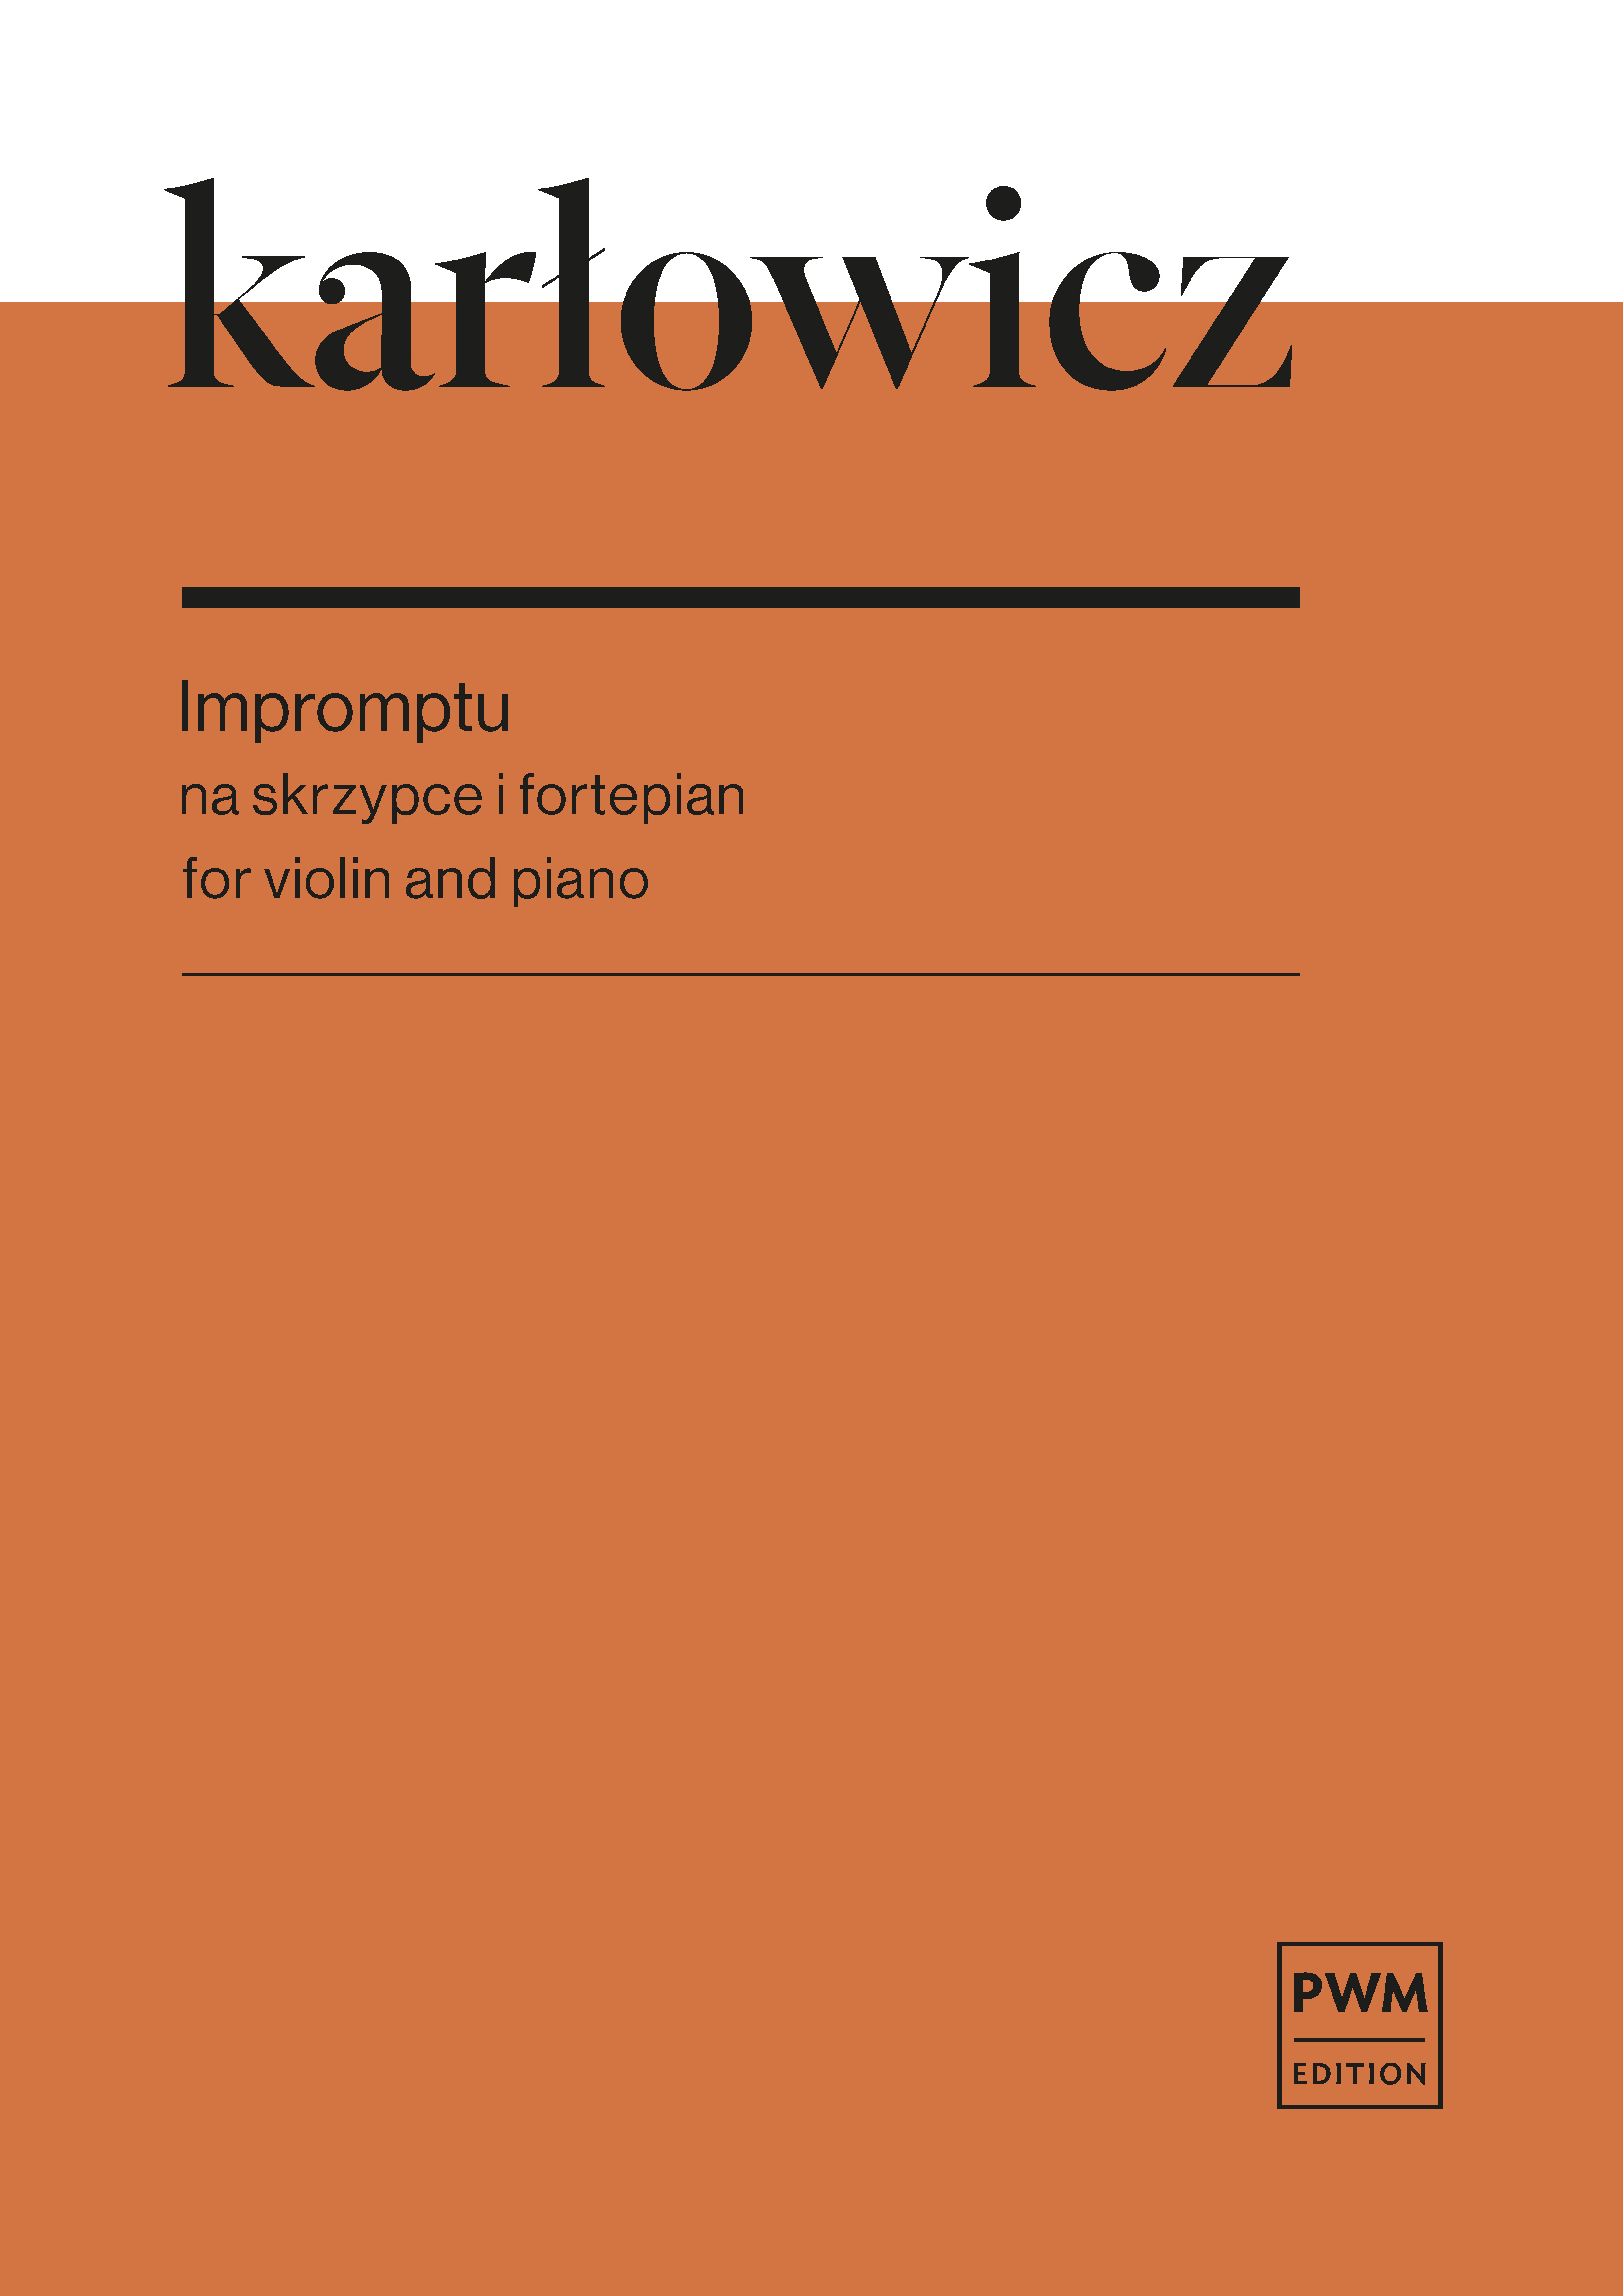 Karlowicz Impromptu Violin & Piano Sheet Music Songbook